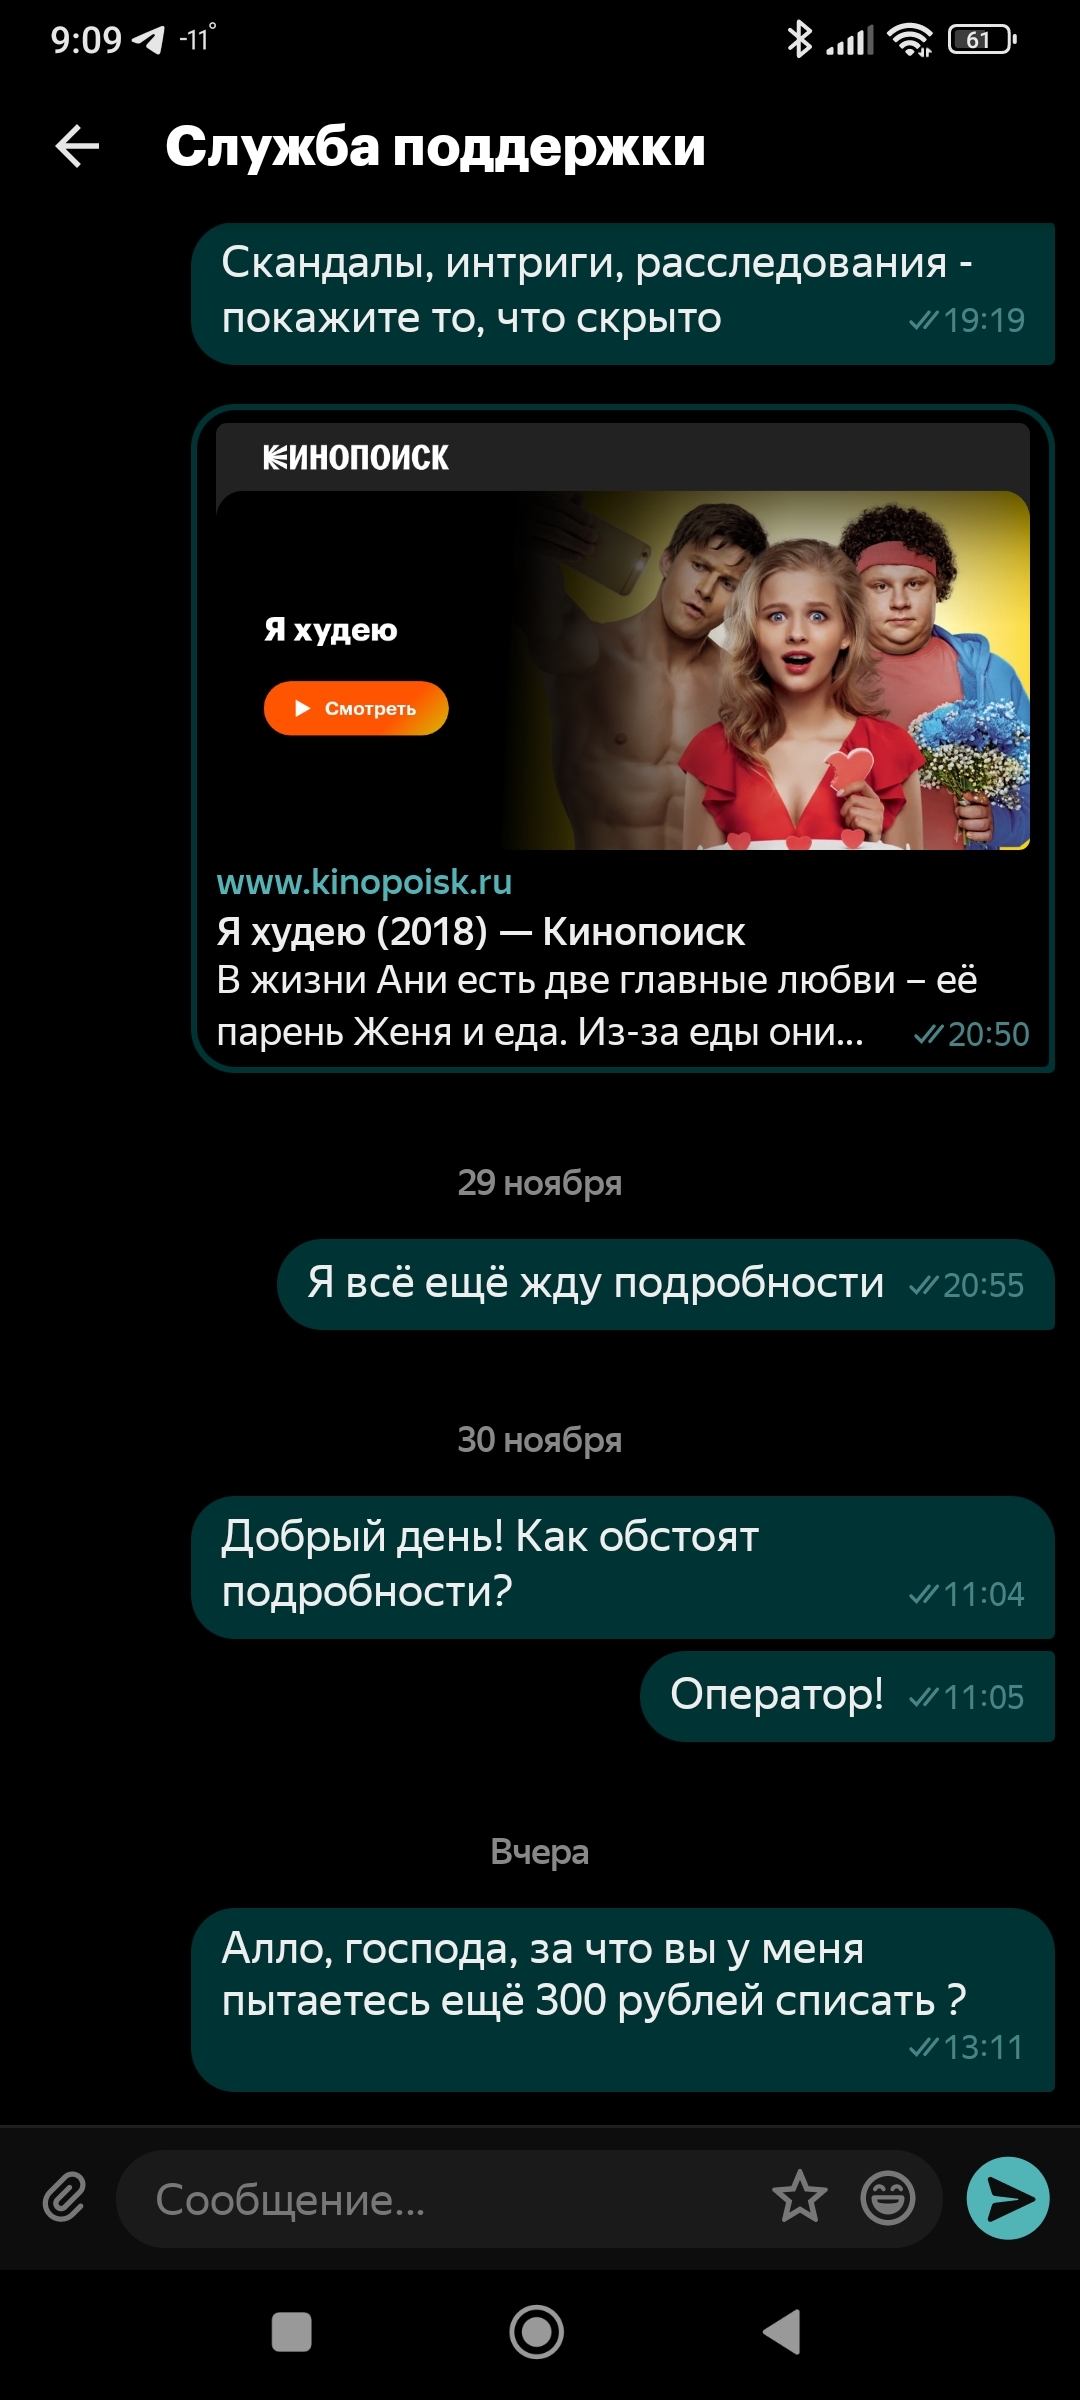 Reply to the post Yandex plus - Yandex., Yandex Plus, Mat, No rating, Negative, A complaint, Longpost, Support service, Screenshot